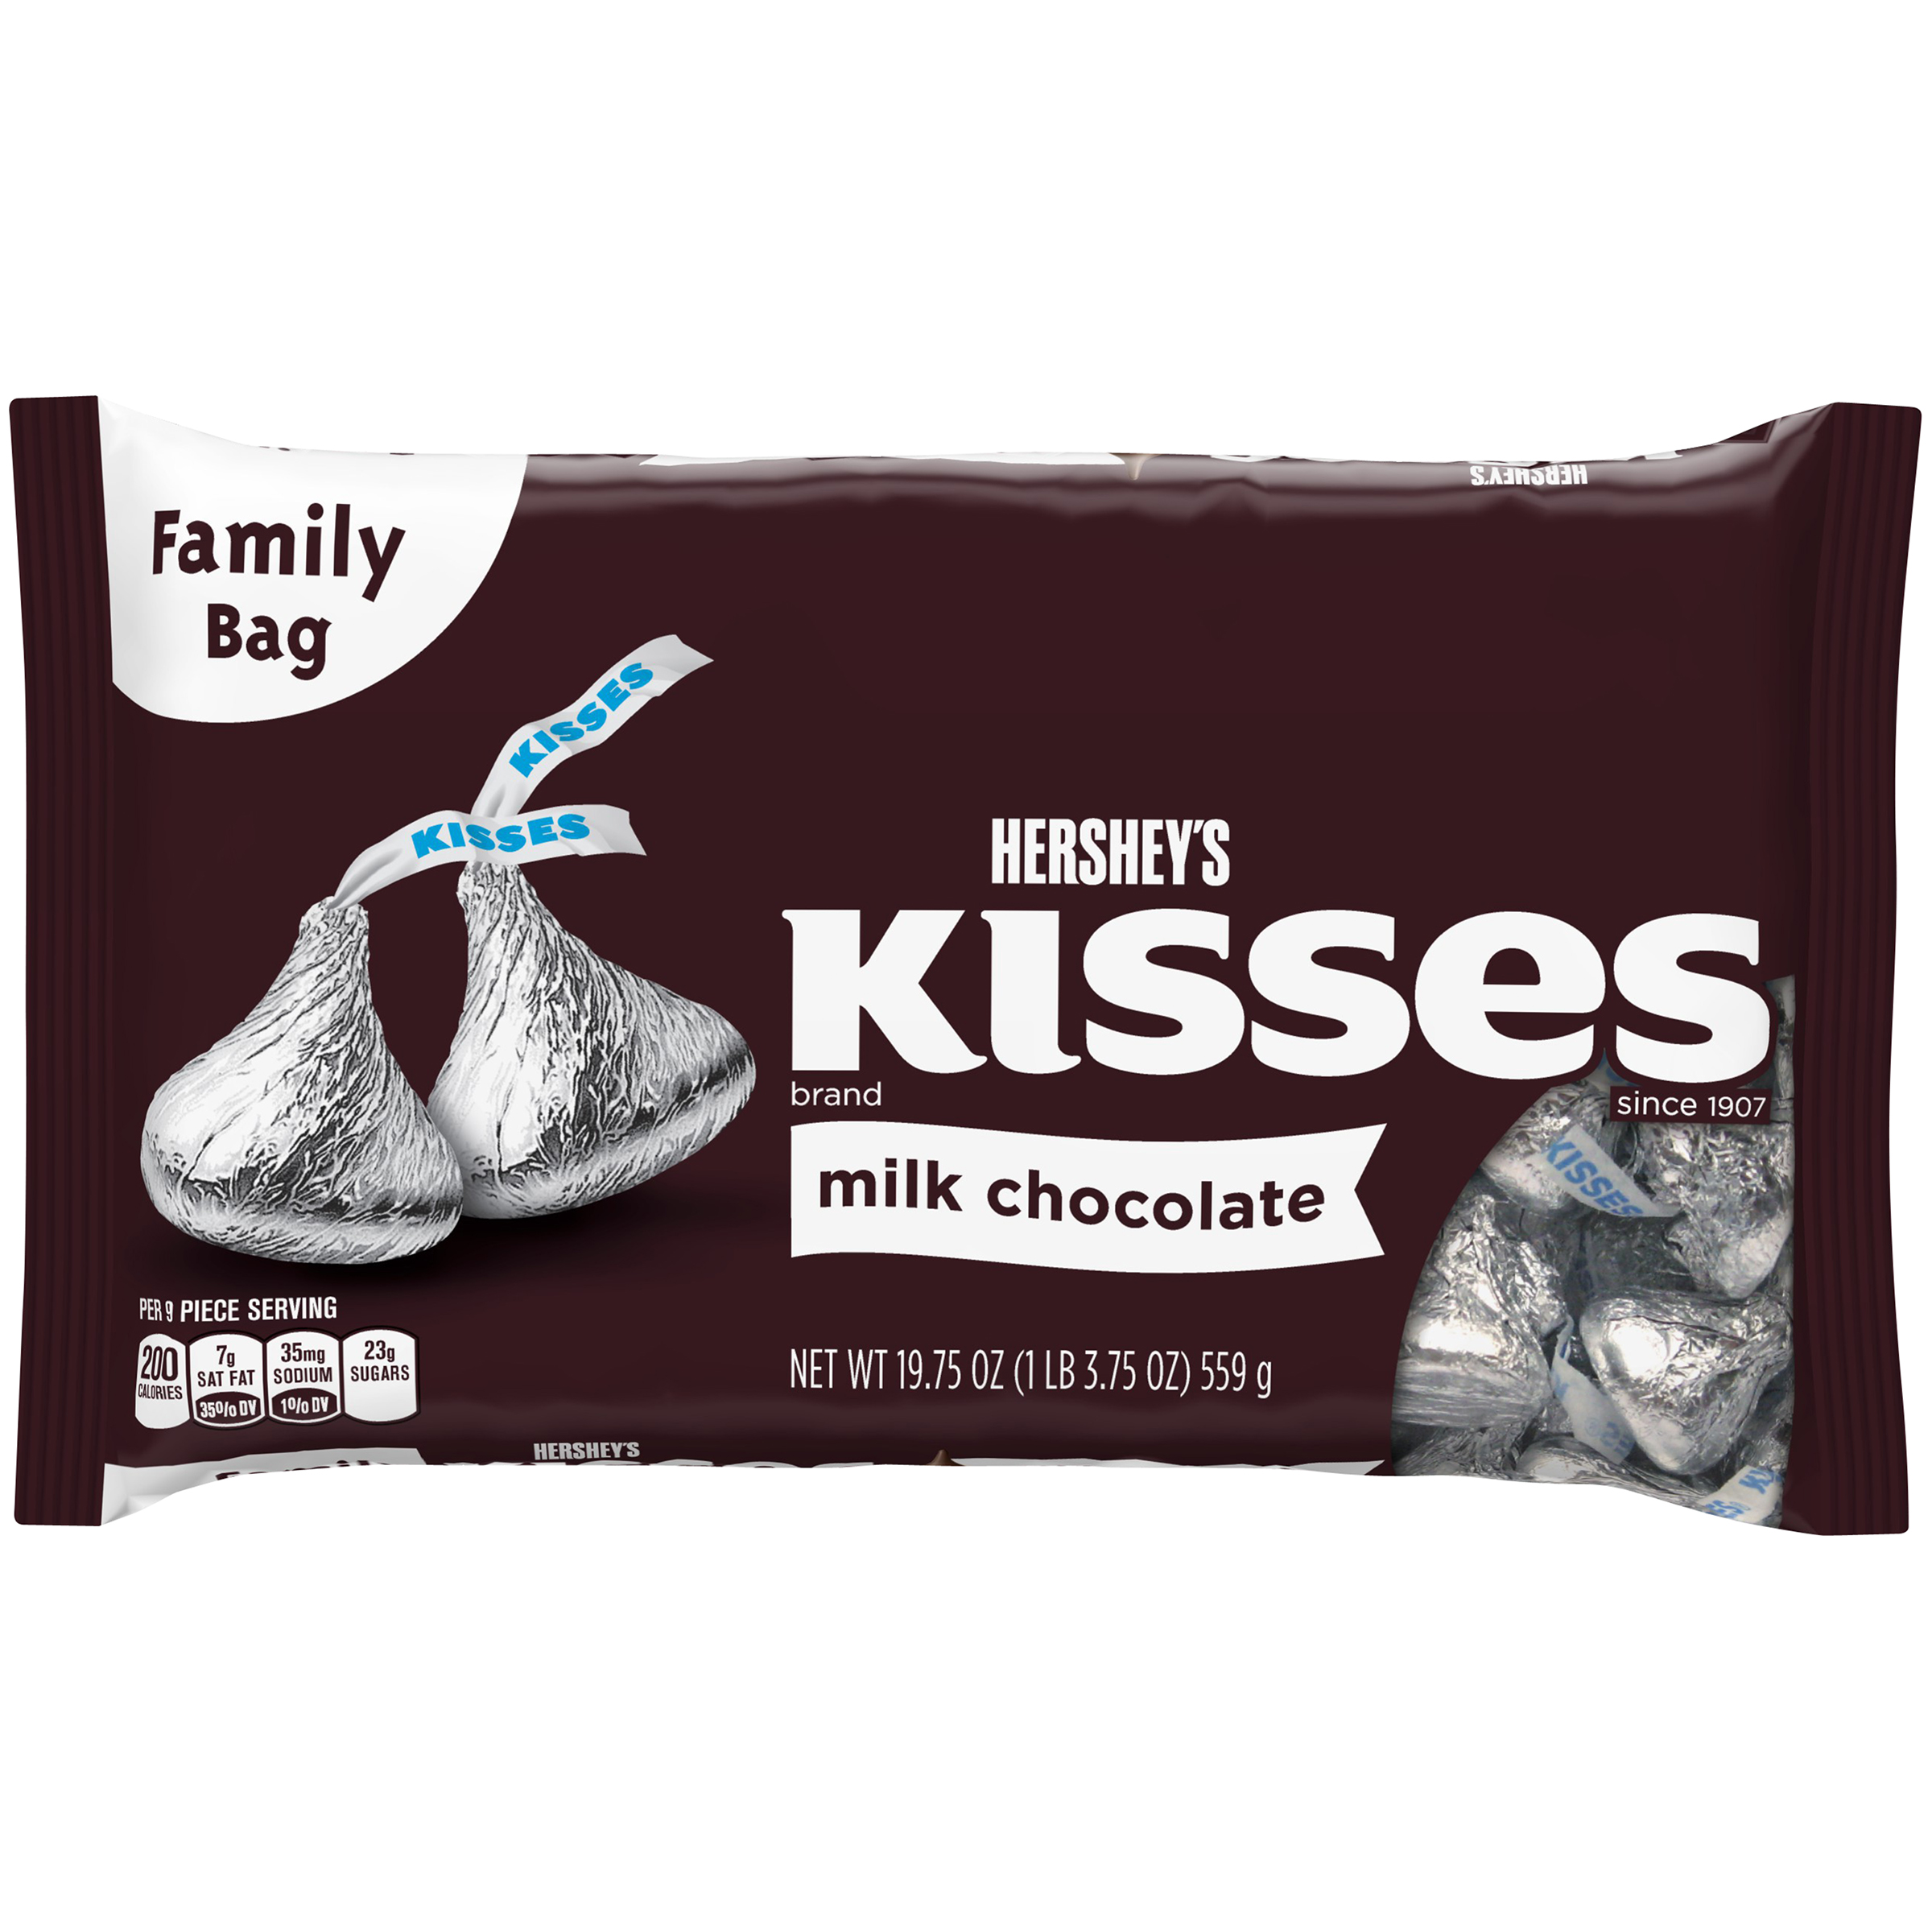 Hershey's Kisses, Milk Chocolate, 19.75 oz (559 g)